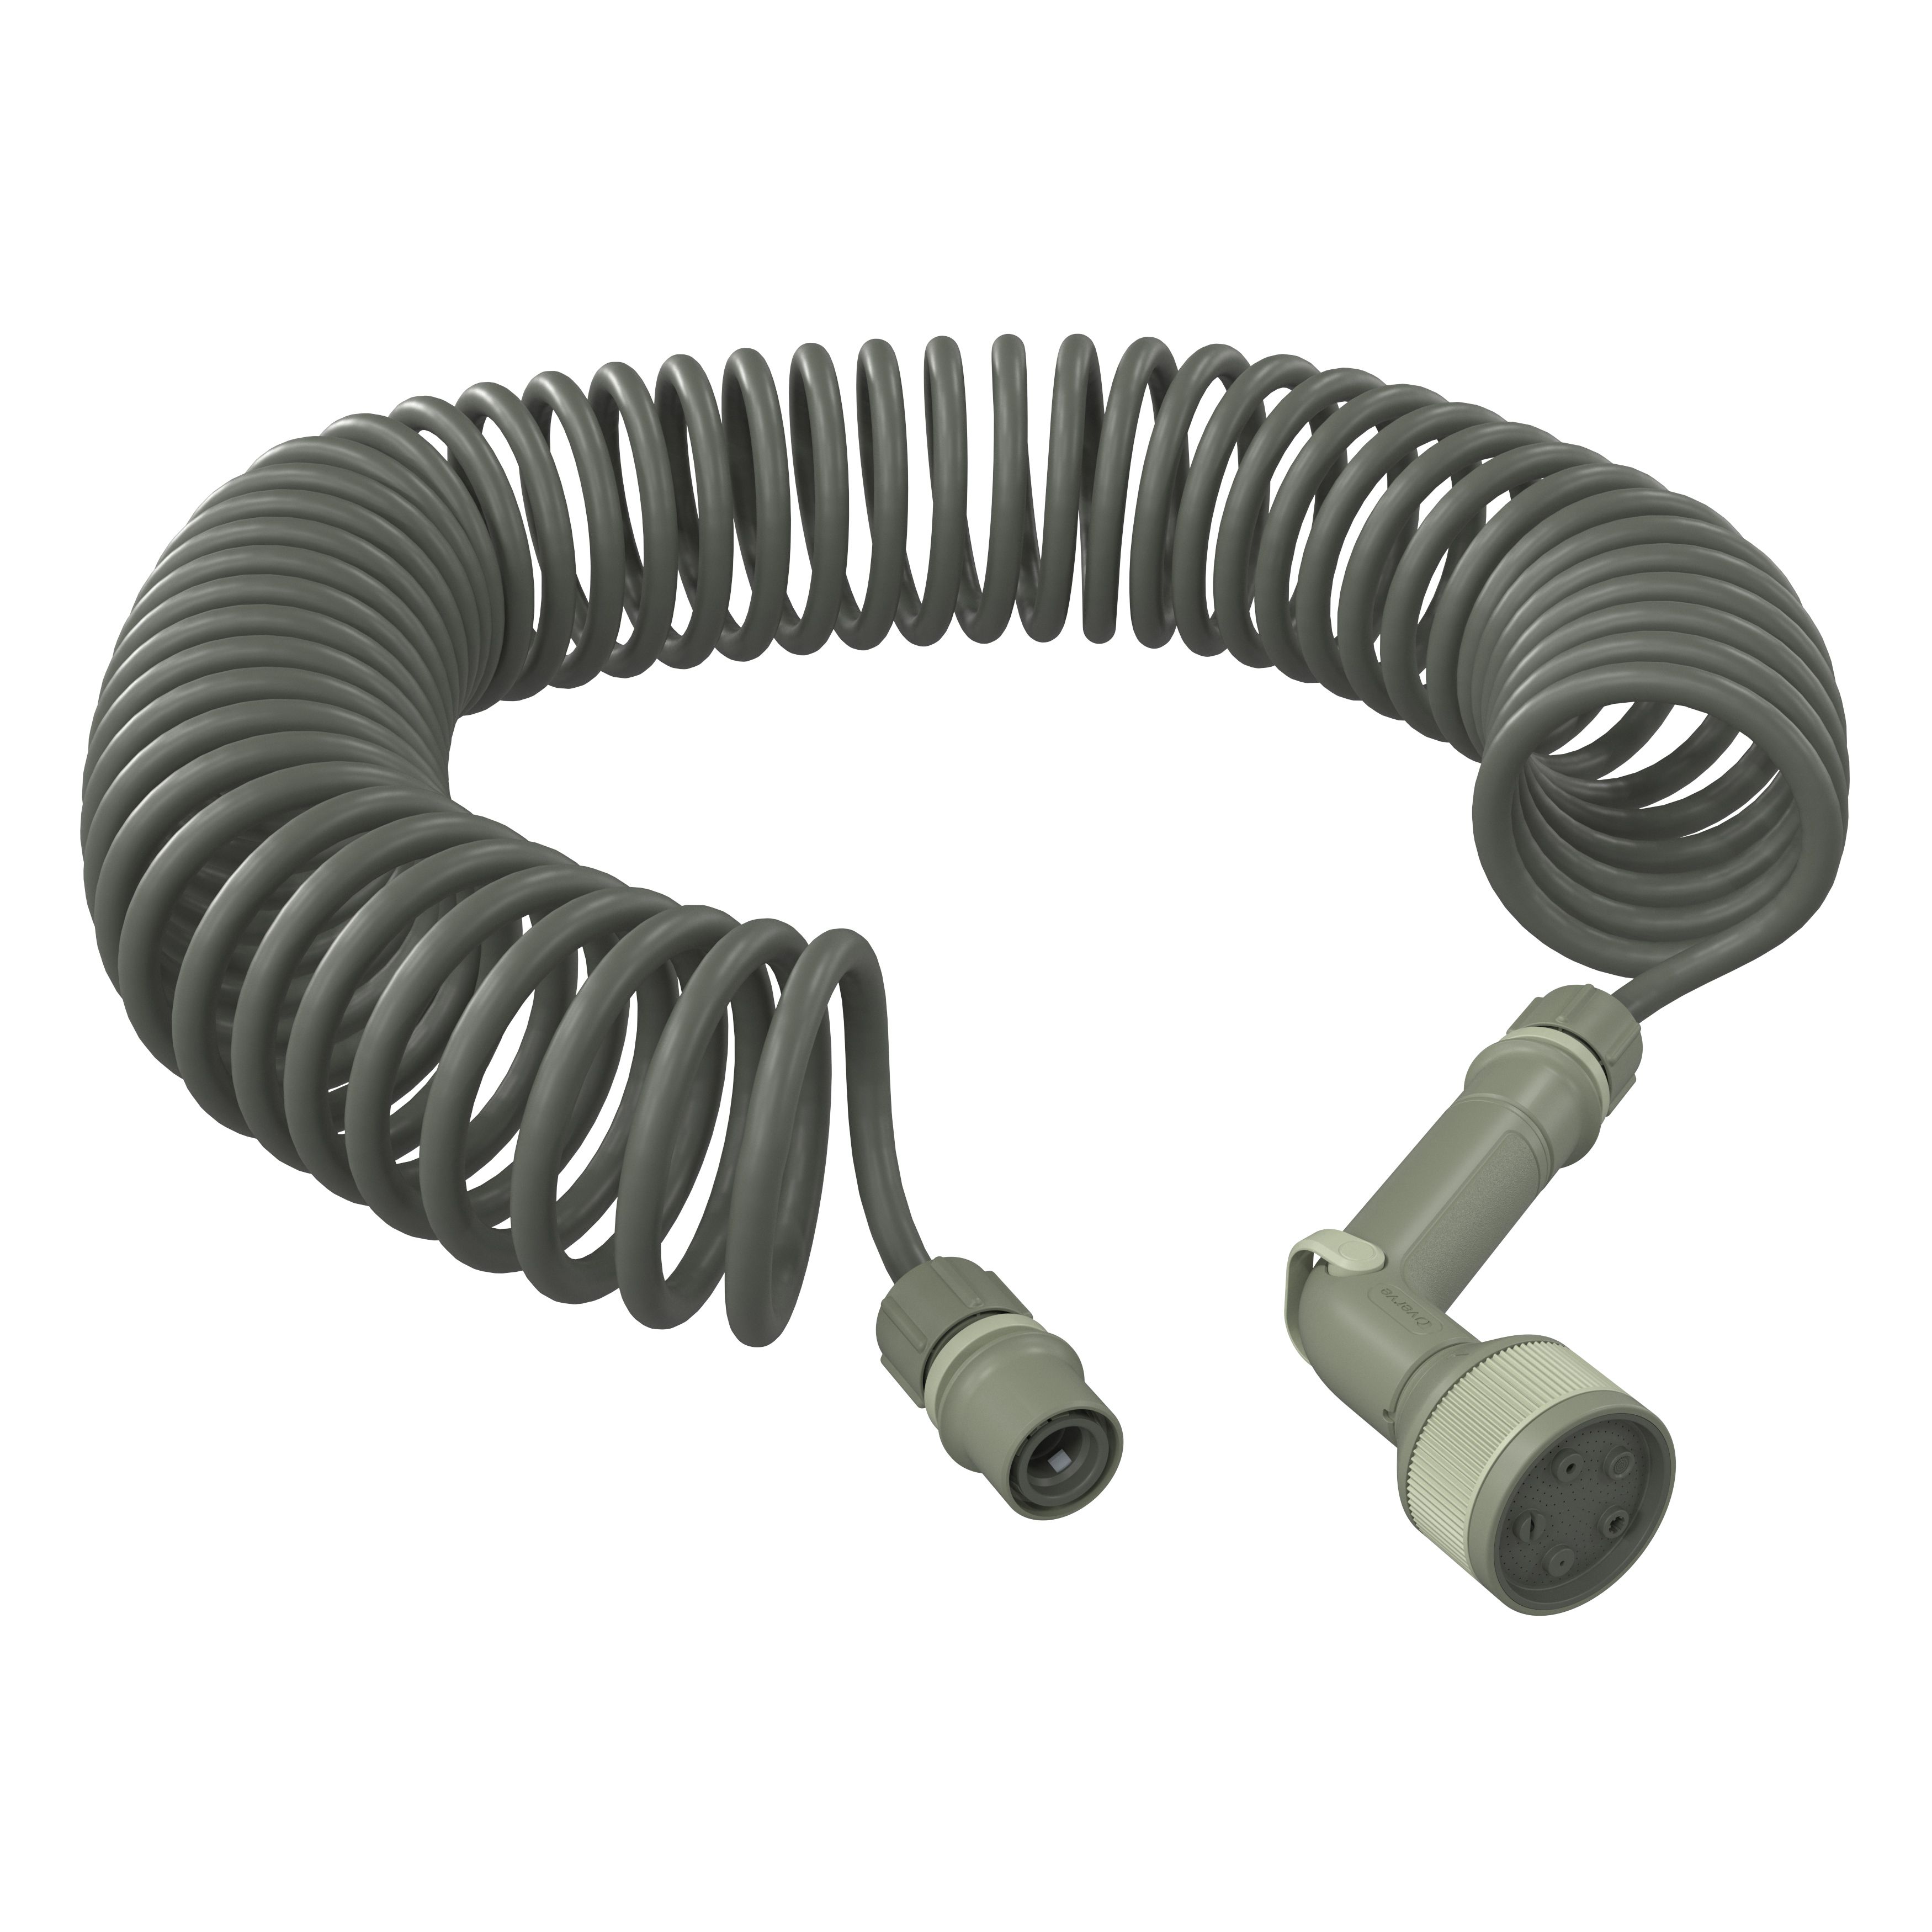 Verve Spiral Expandable Hose pipe set